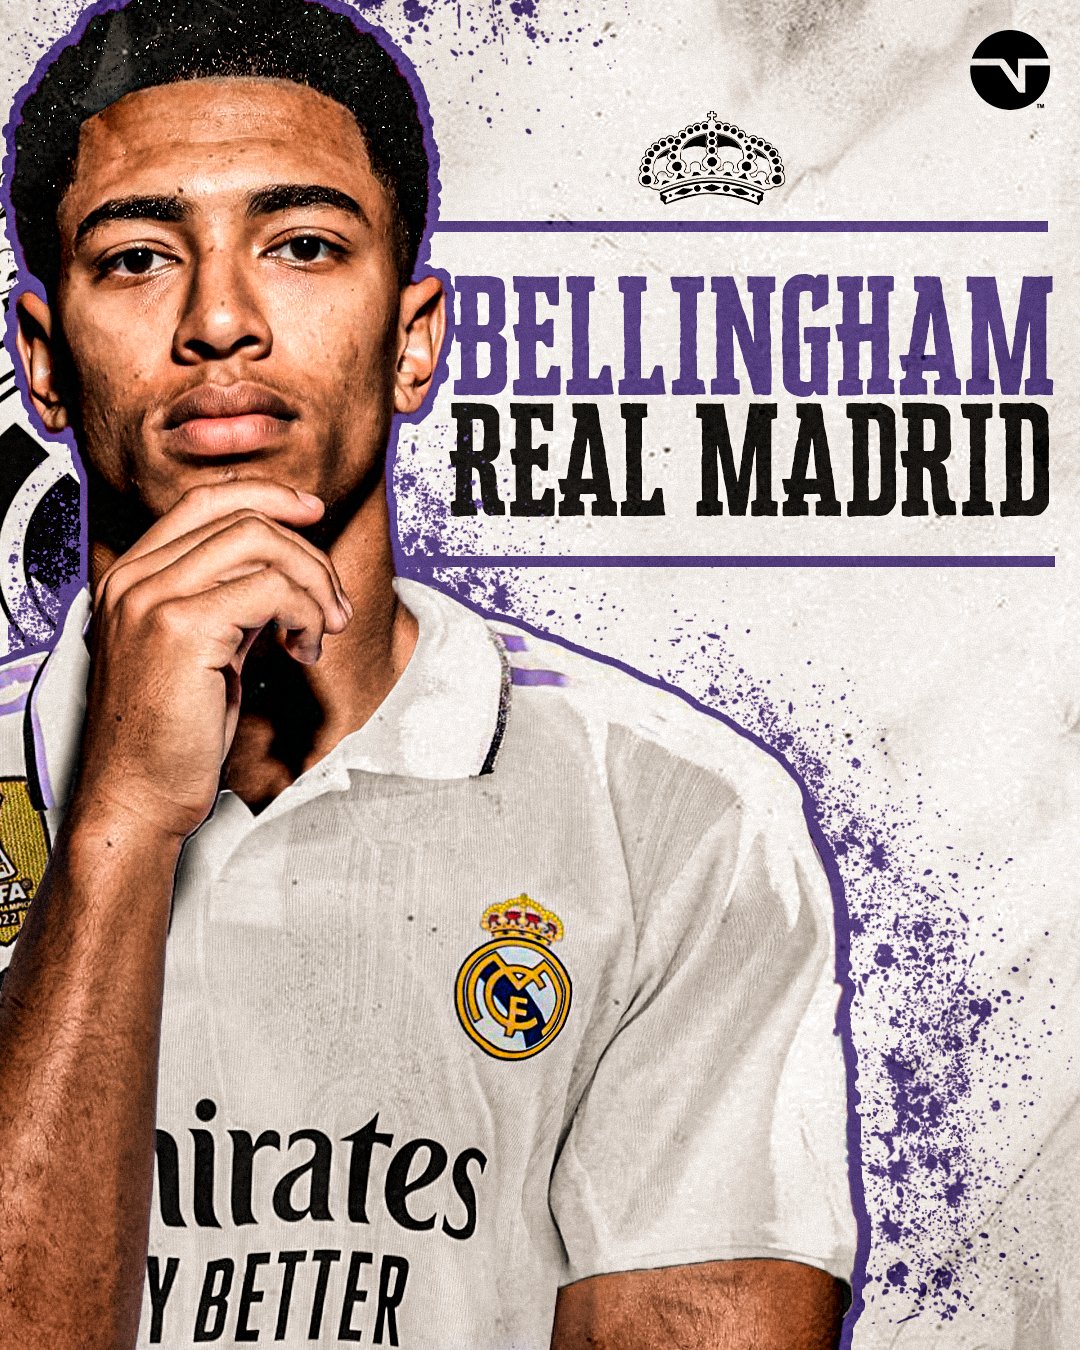 Bellingham Real Madrid wallpaper